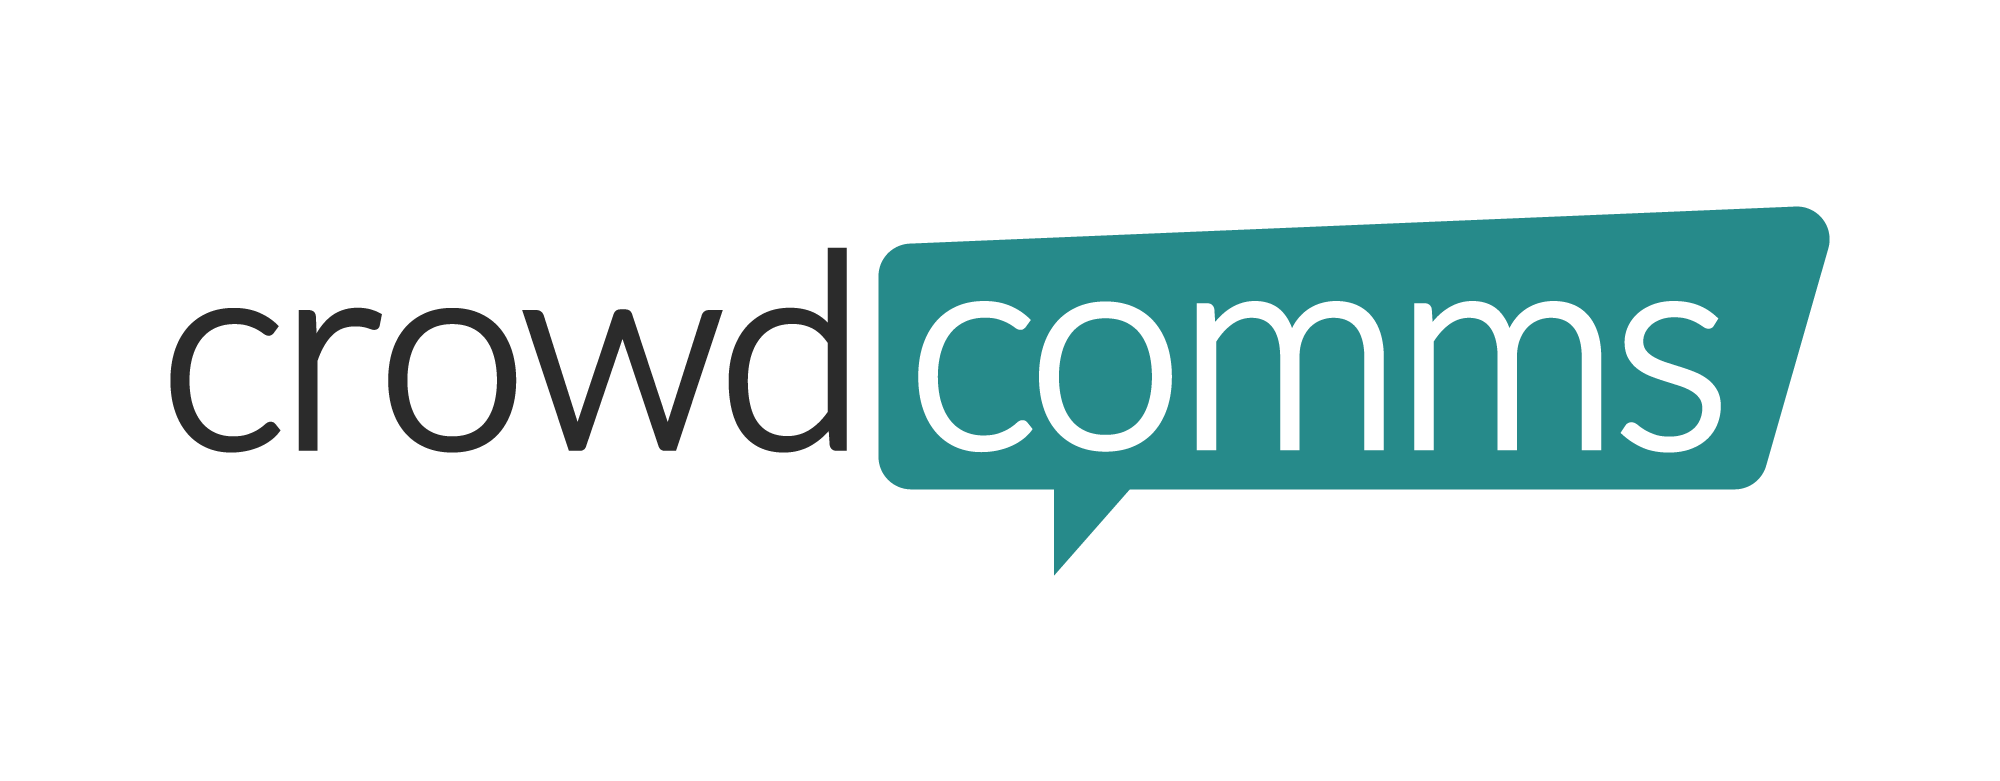 crowdcomms-logo